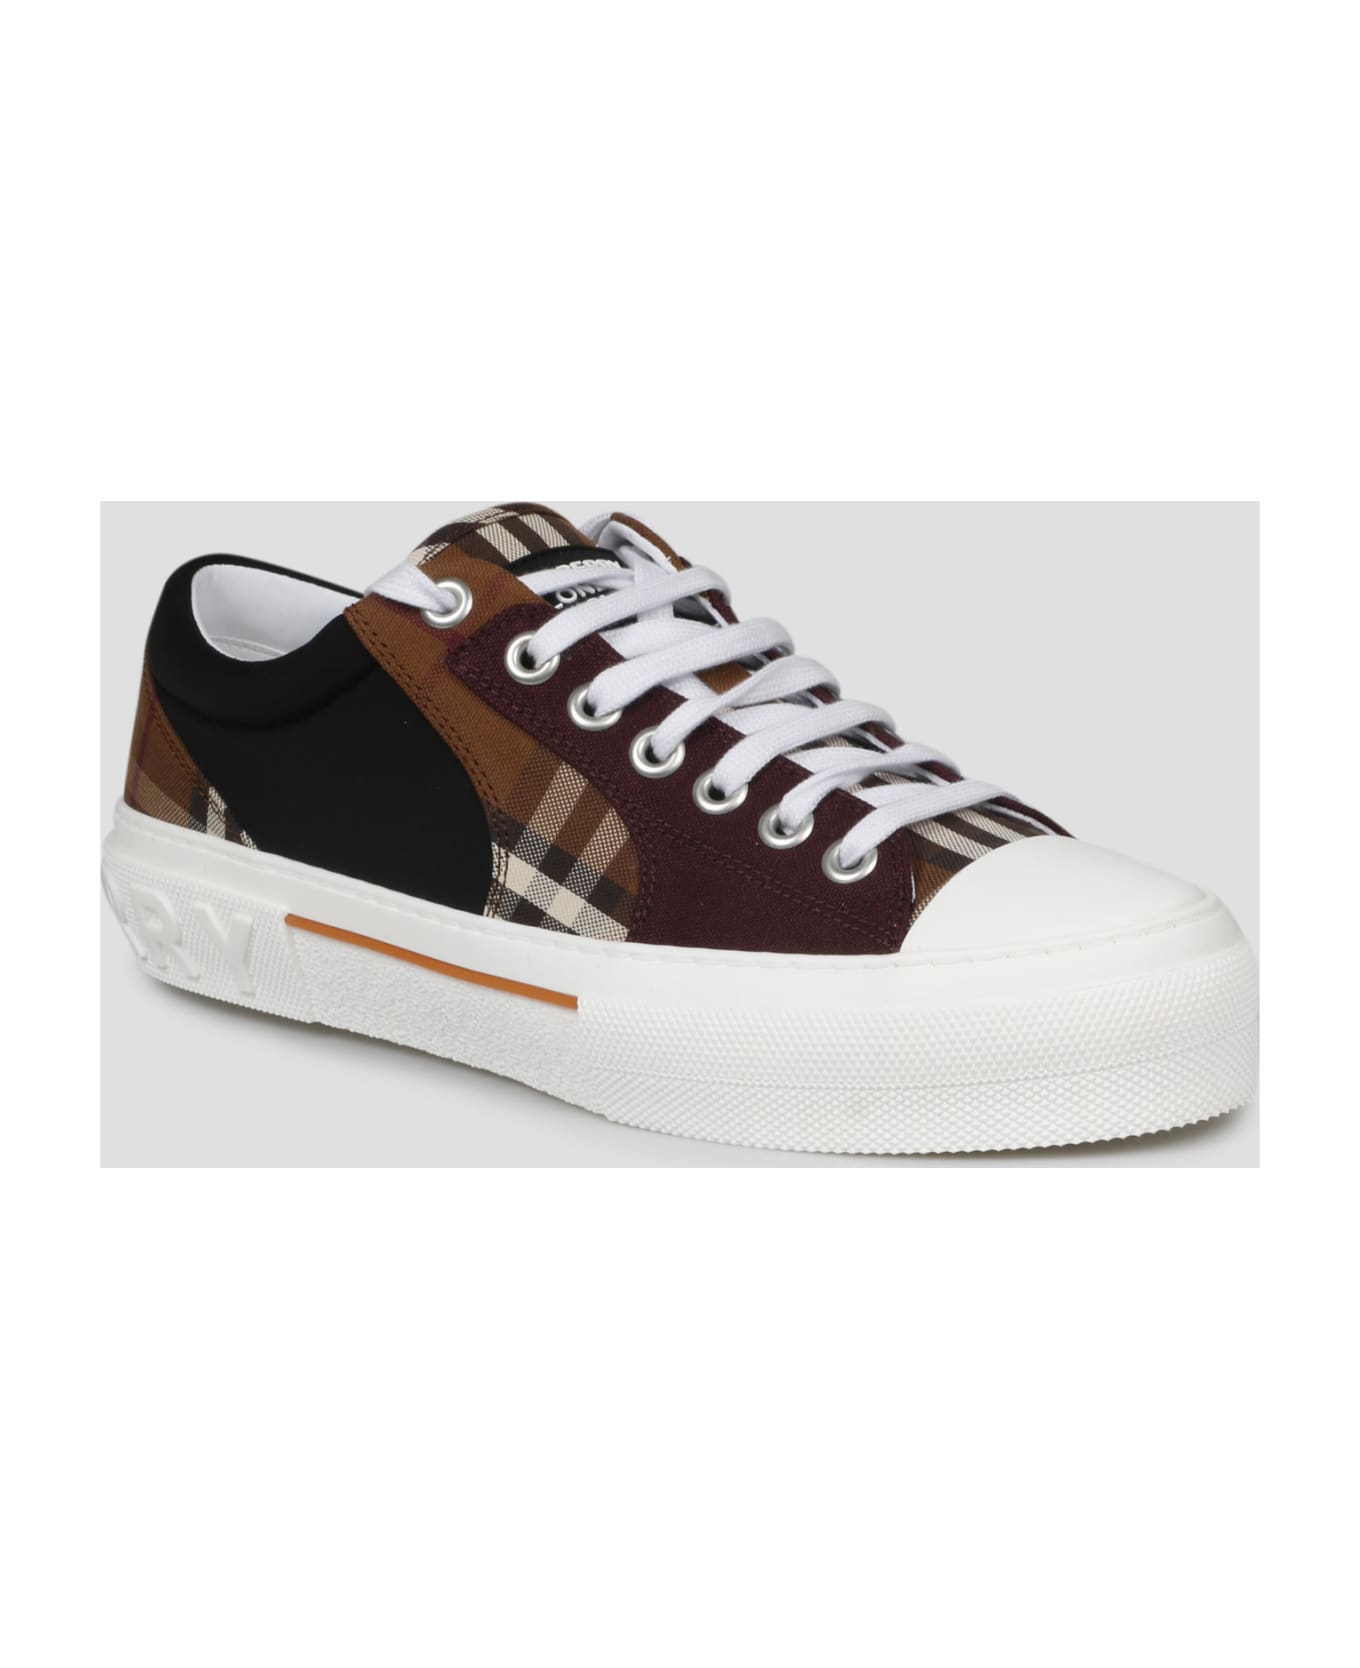 Burberry Kai Low Top Sneakers - Brown